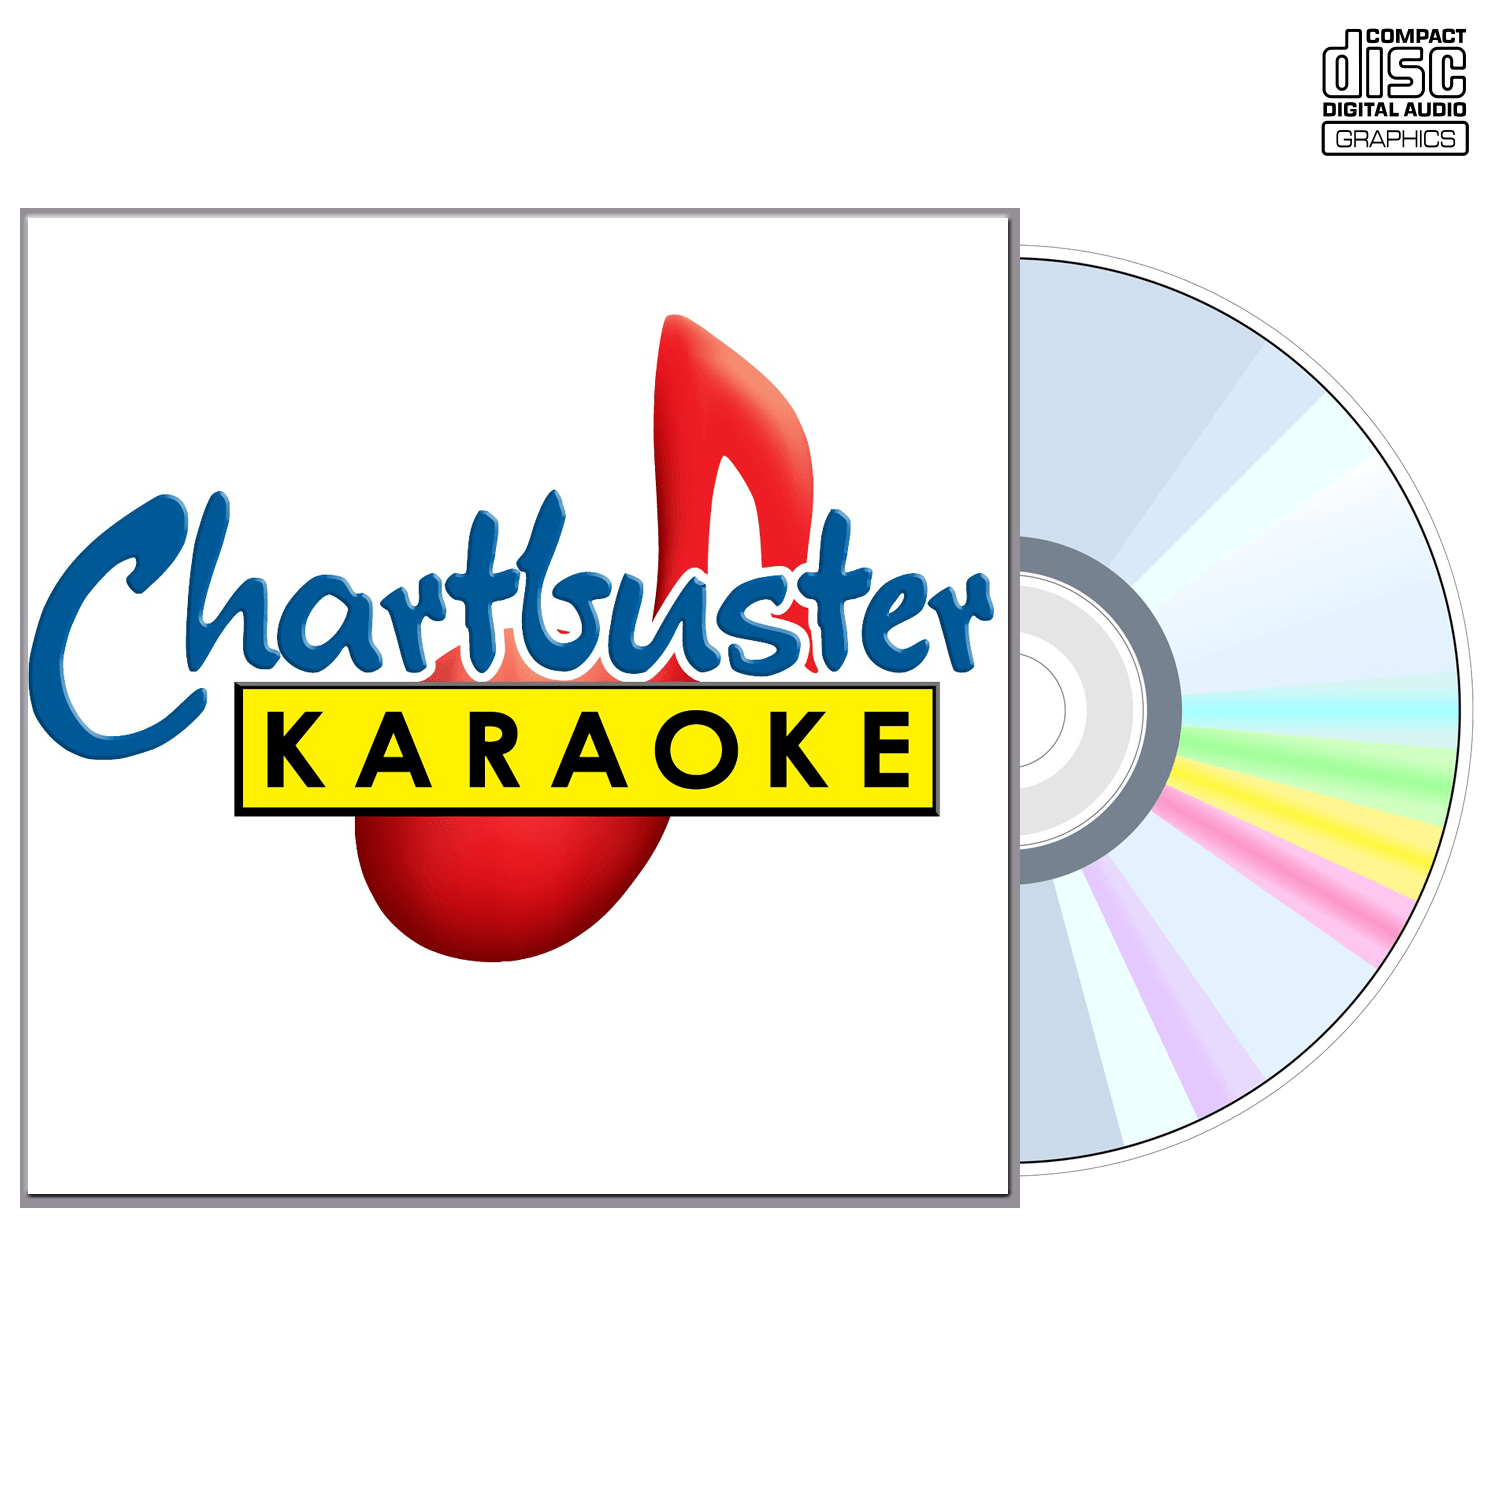 Third Eye Blind - CD+G - Chartbuster Karaoke - Karaoke Home Entertainment